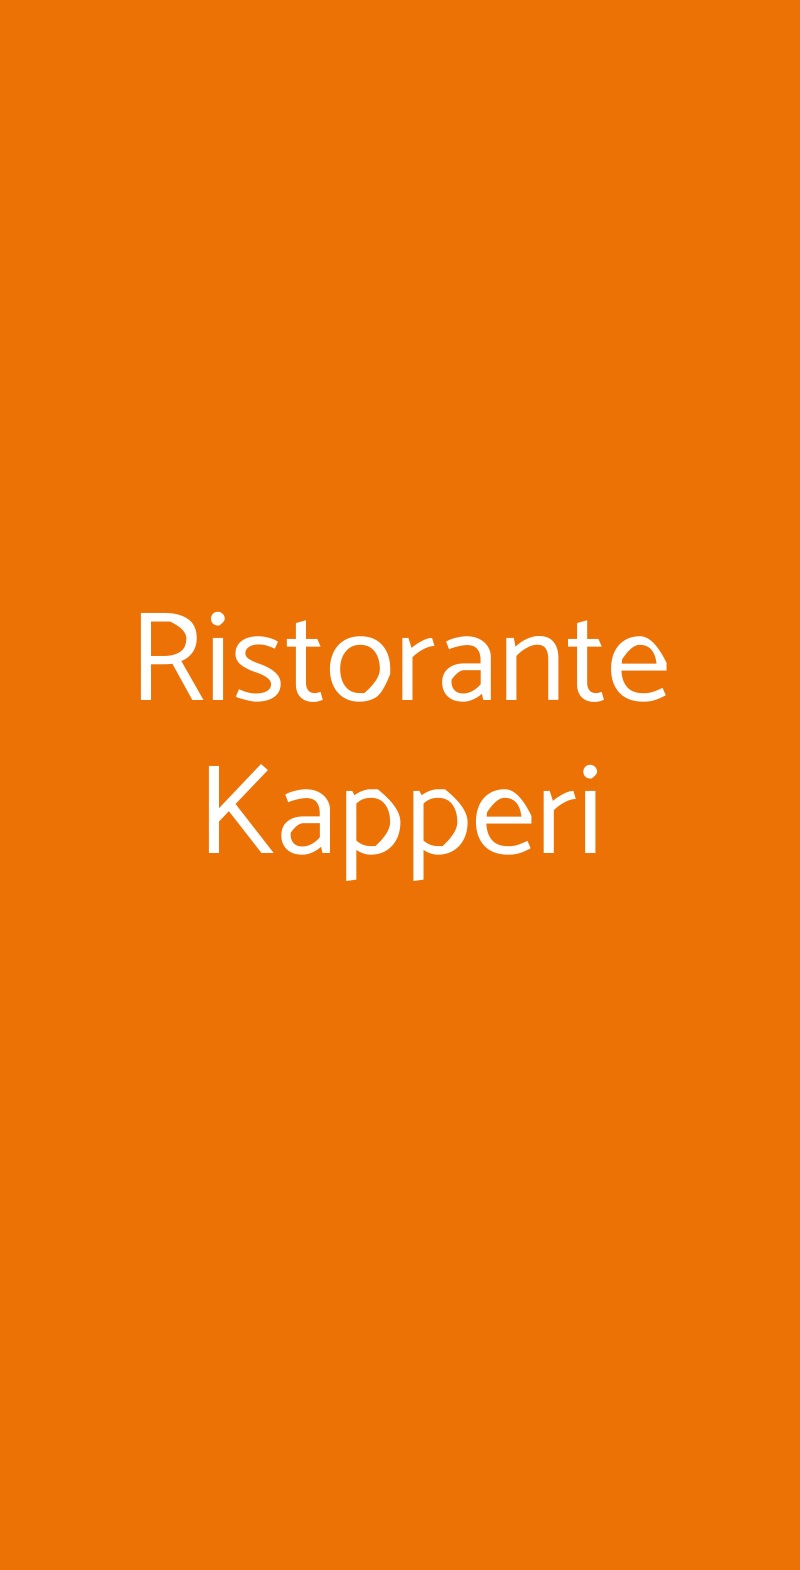 Ristorante Kapperi Genova menù 1 pagina